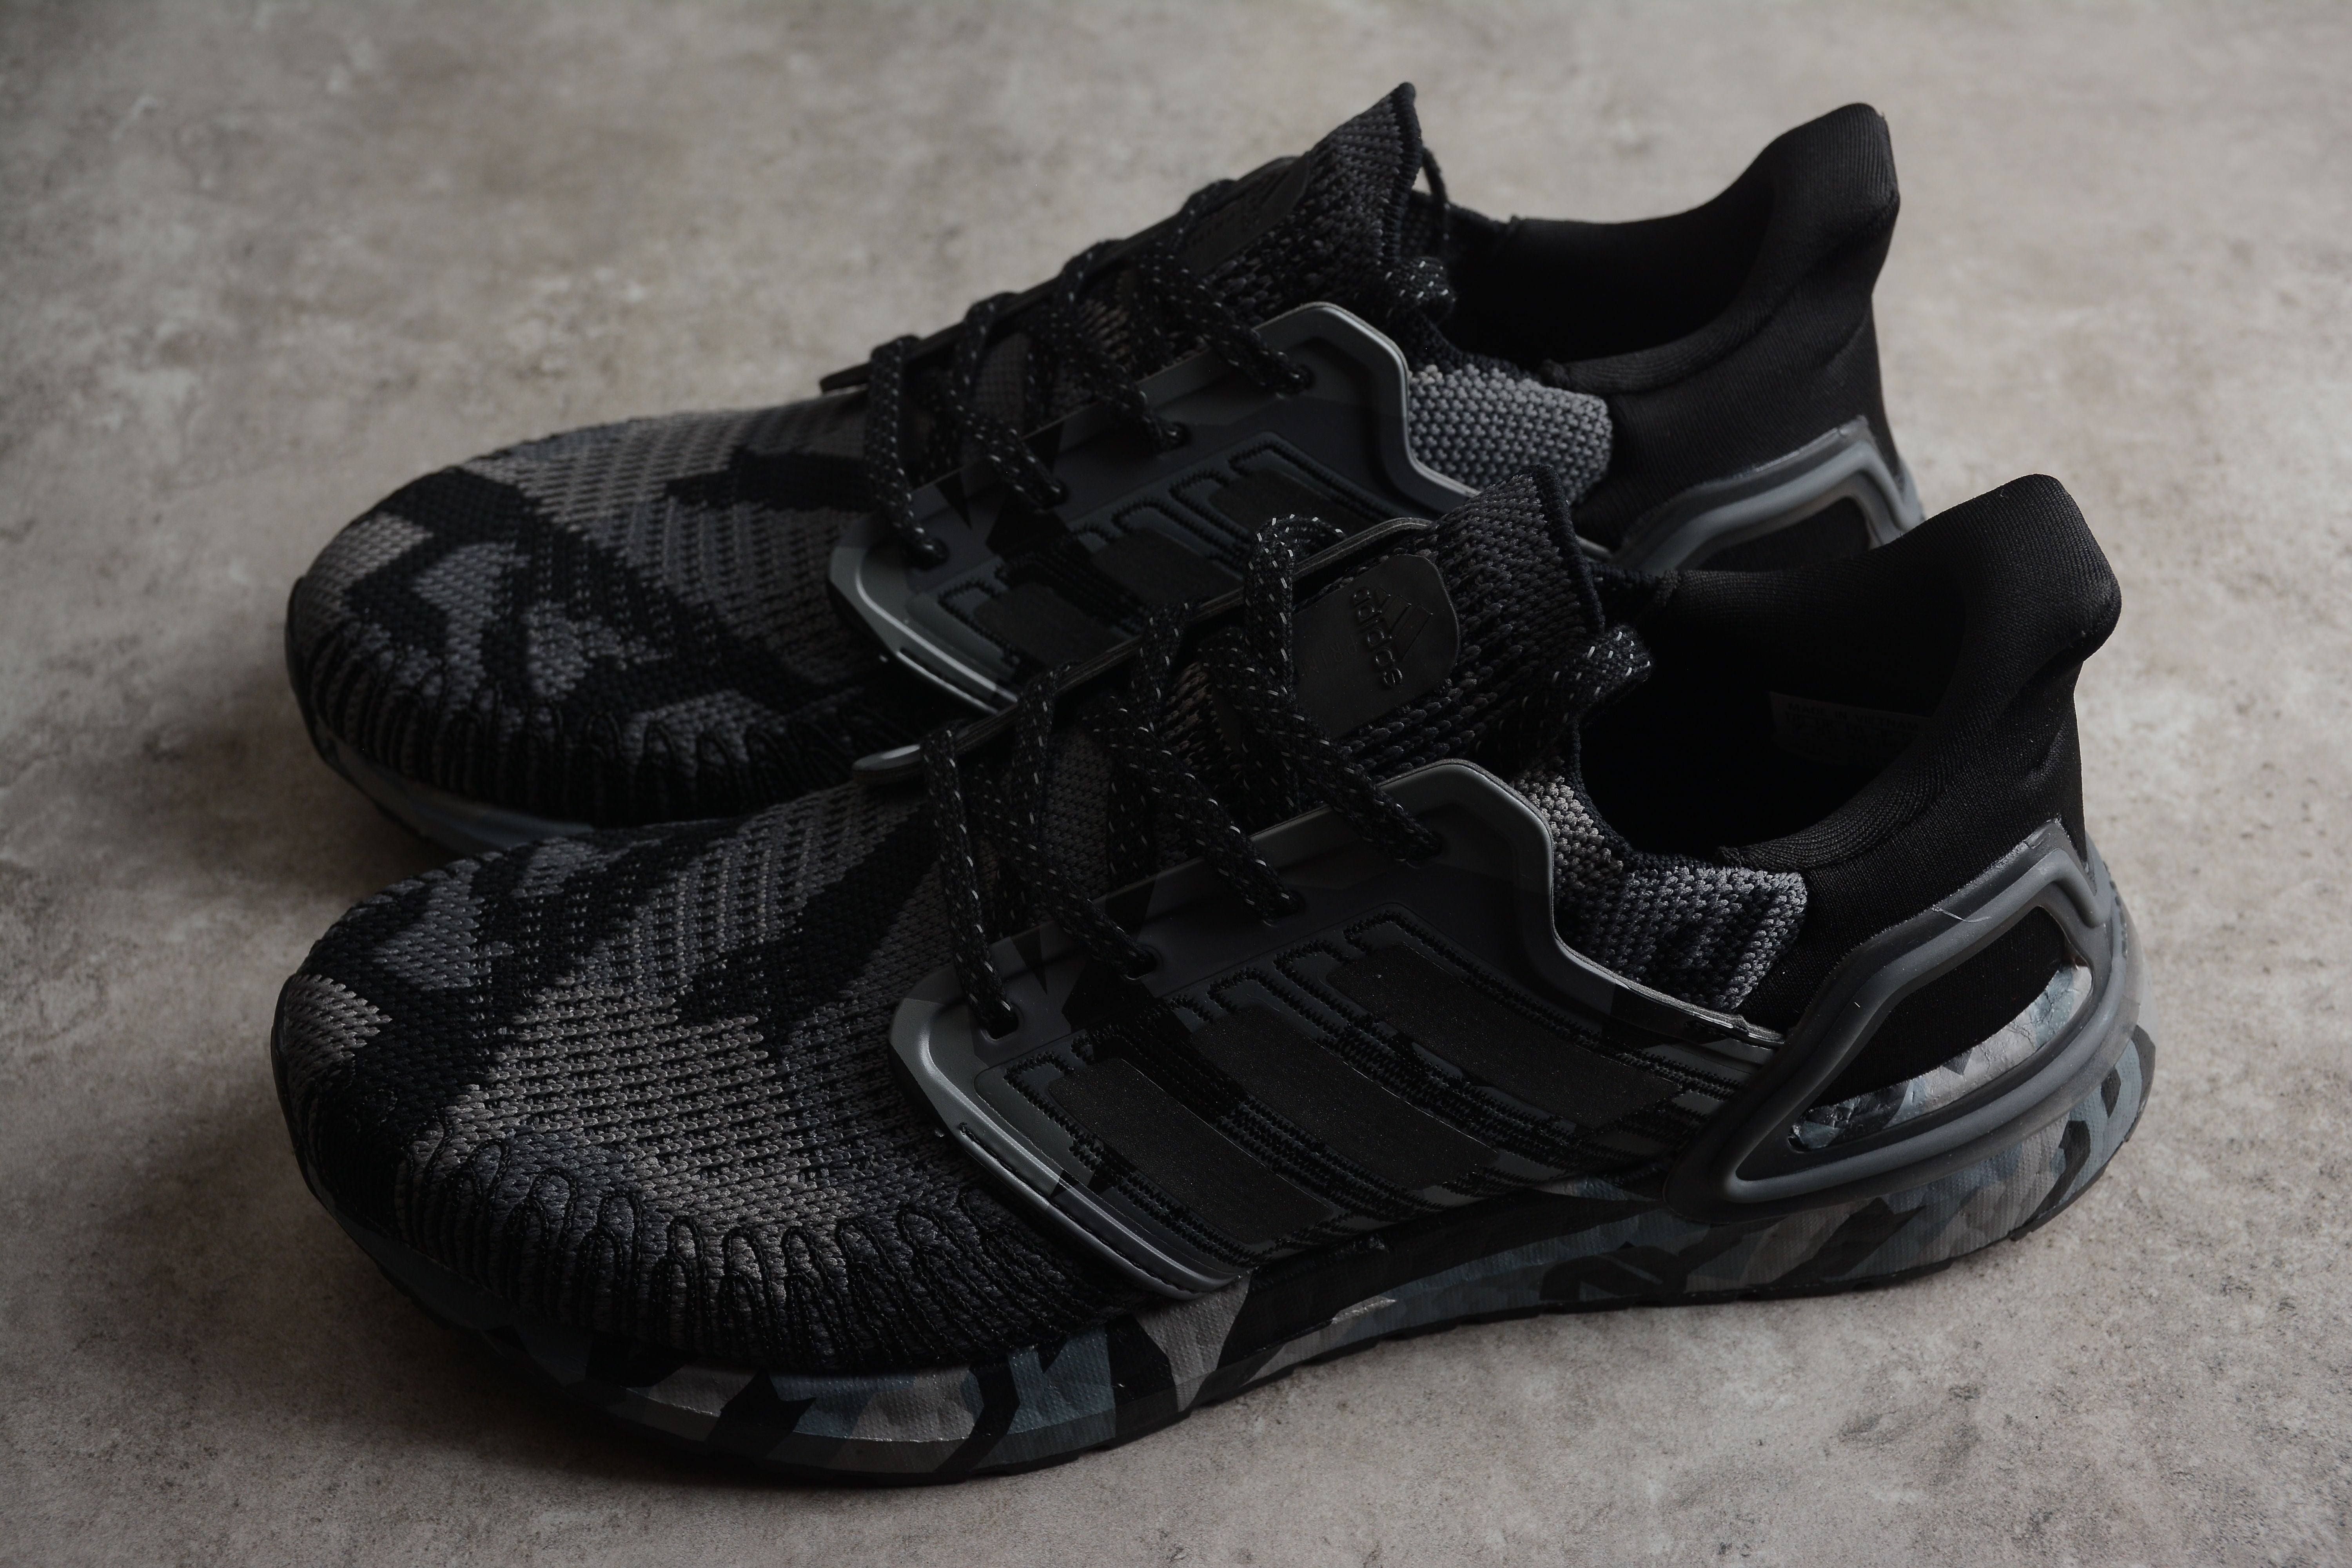 Adidas ultraboost army black shoes